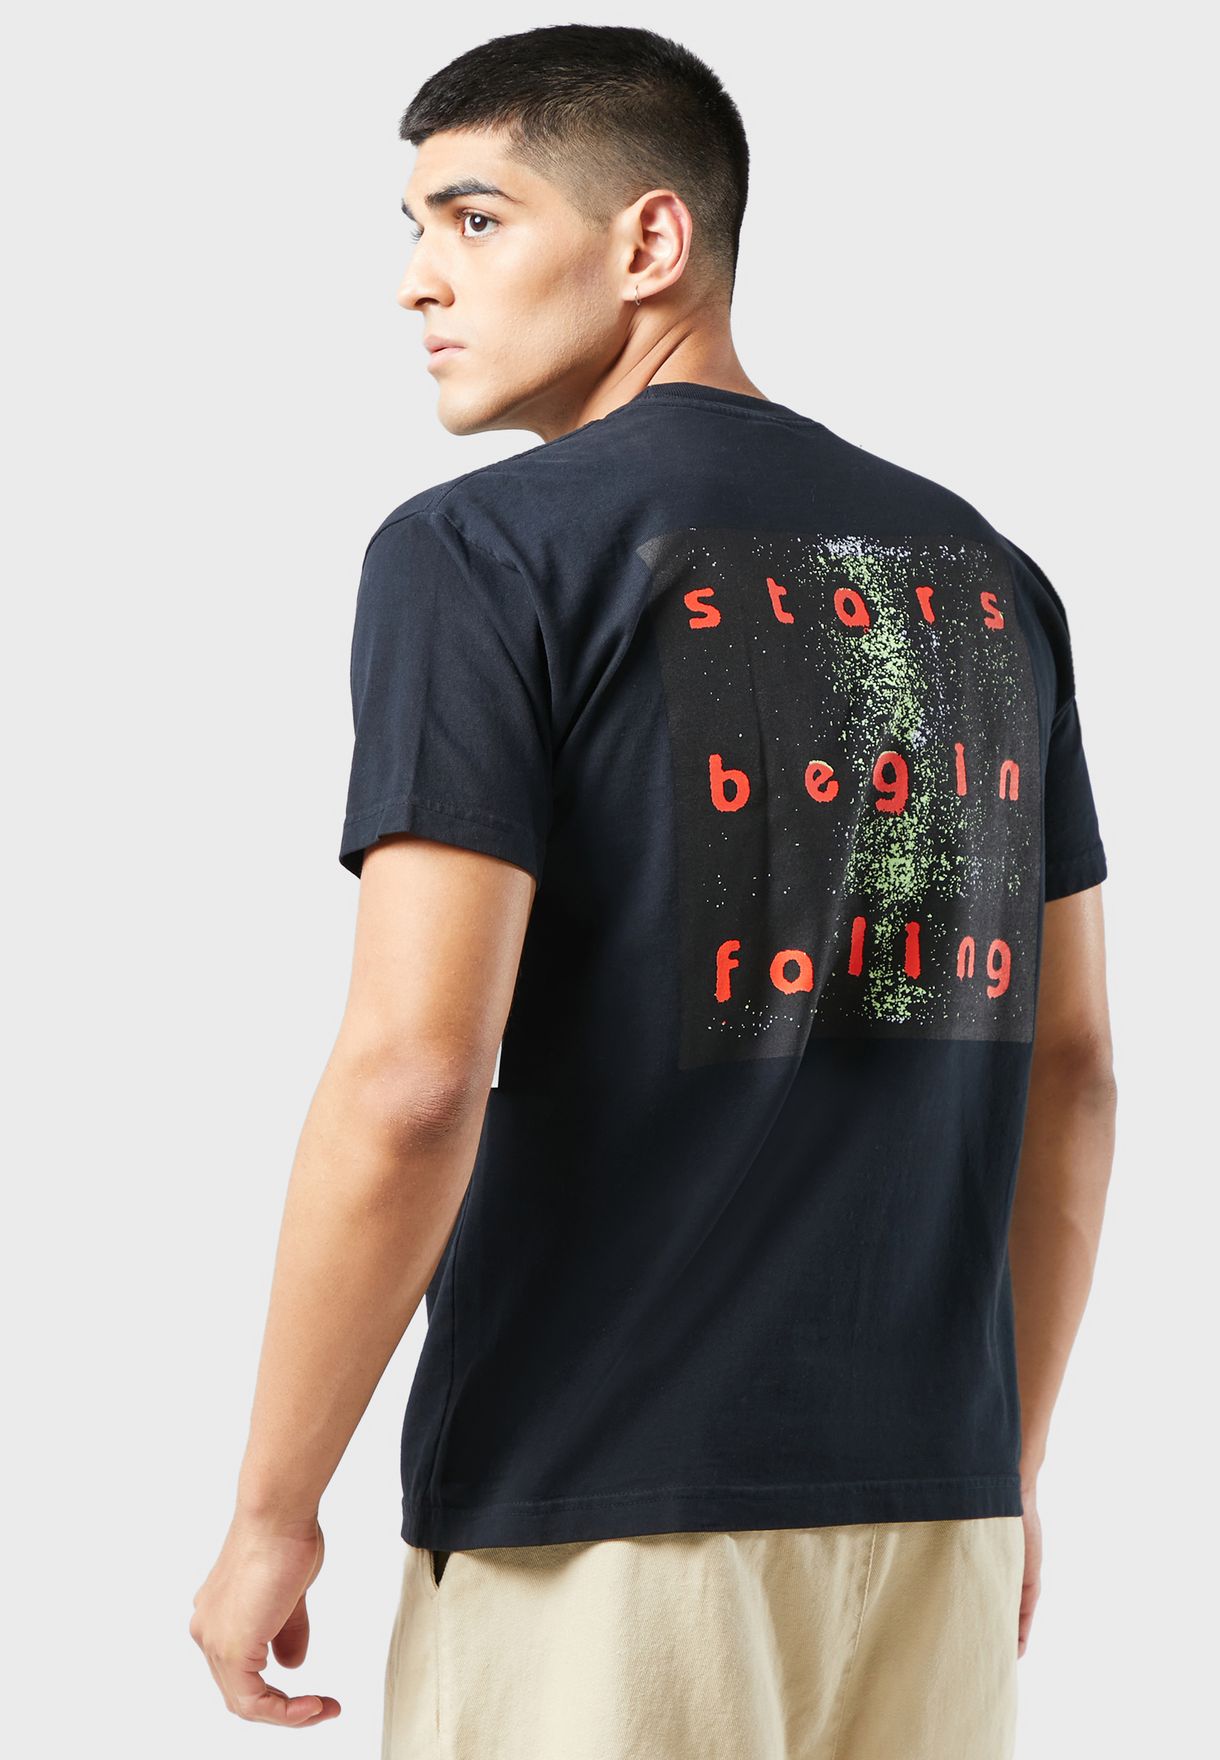 Stars Begin Falling T-Shirt